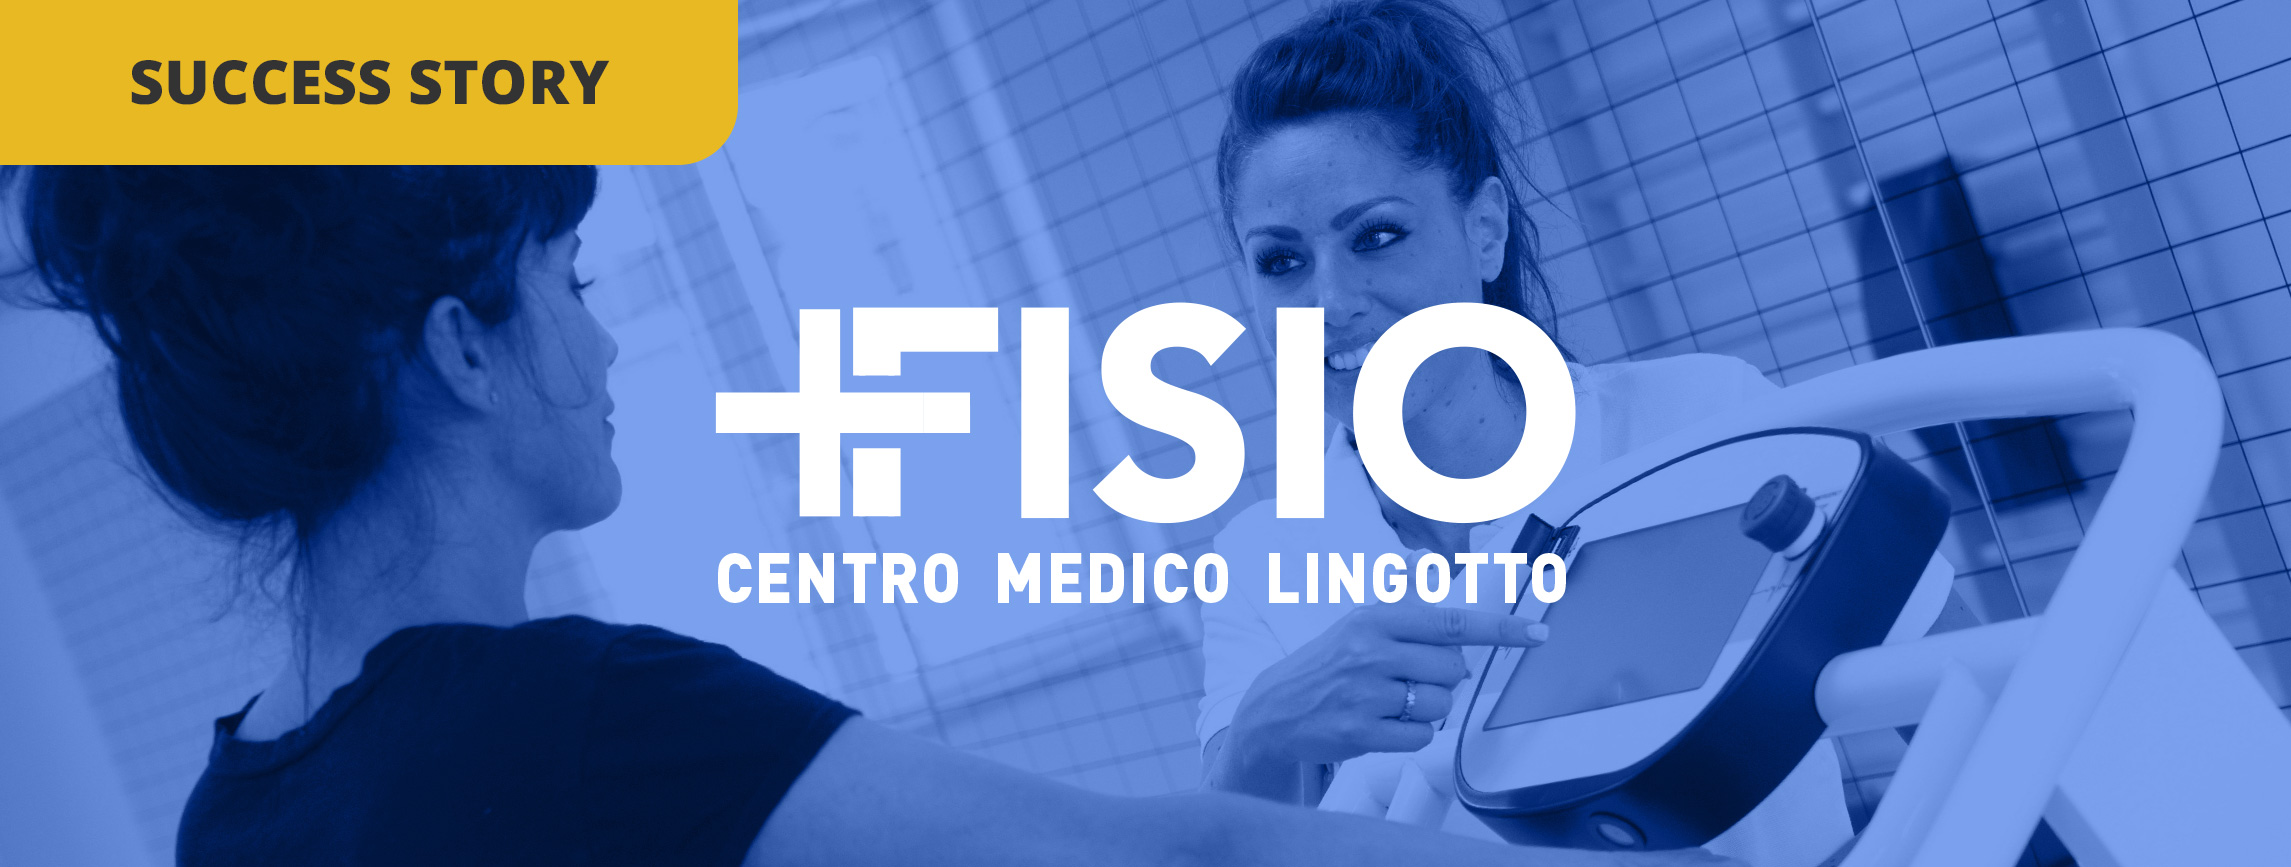 Centro Médico Fisio Lingotto - Caso de Éxito